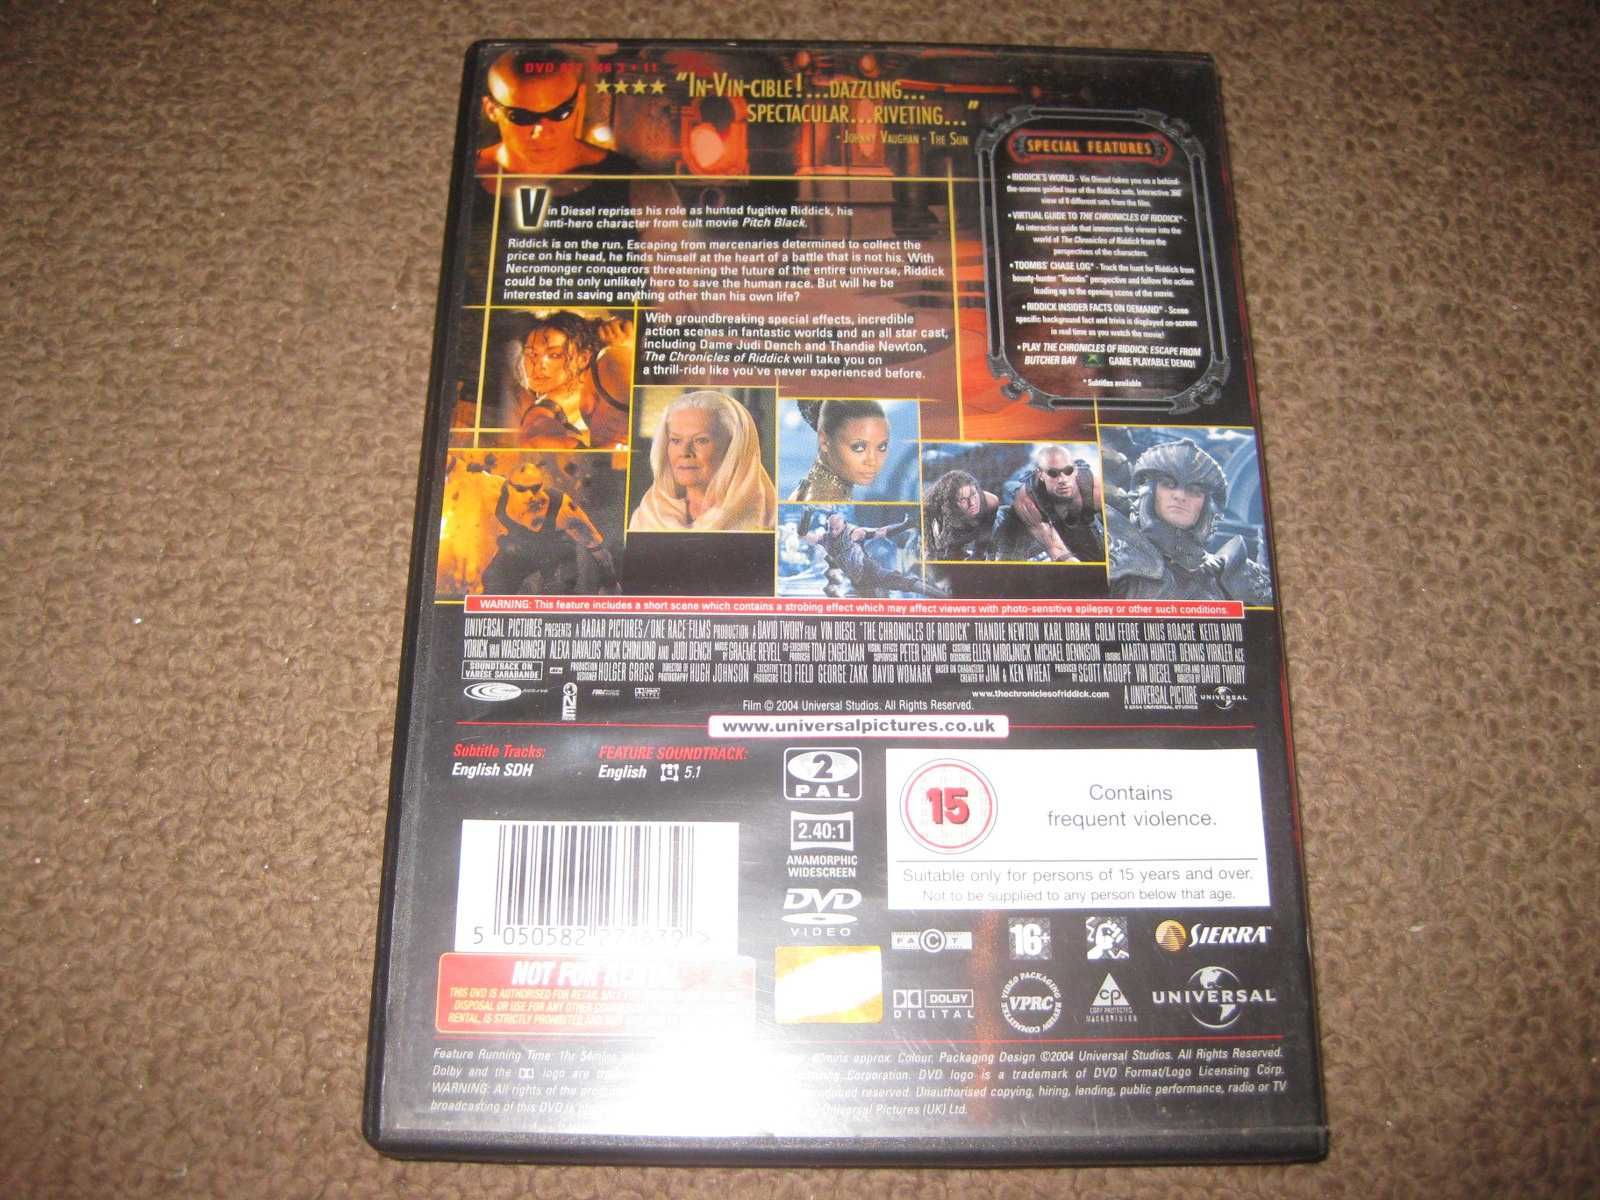 DVD "As Crónicas de Riddick" com Vin Diesel